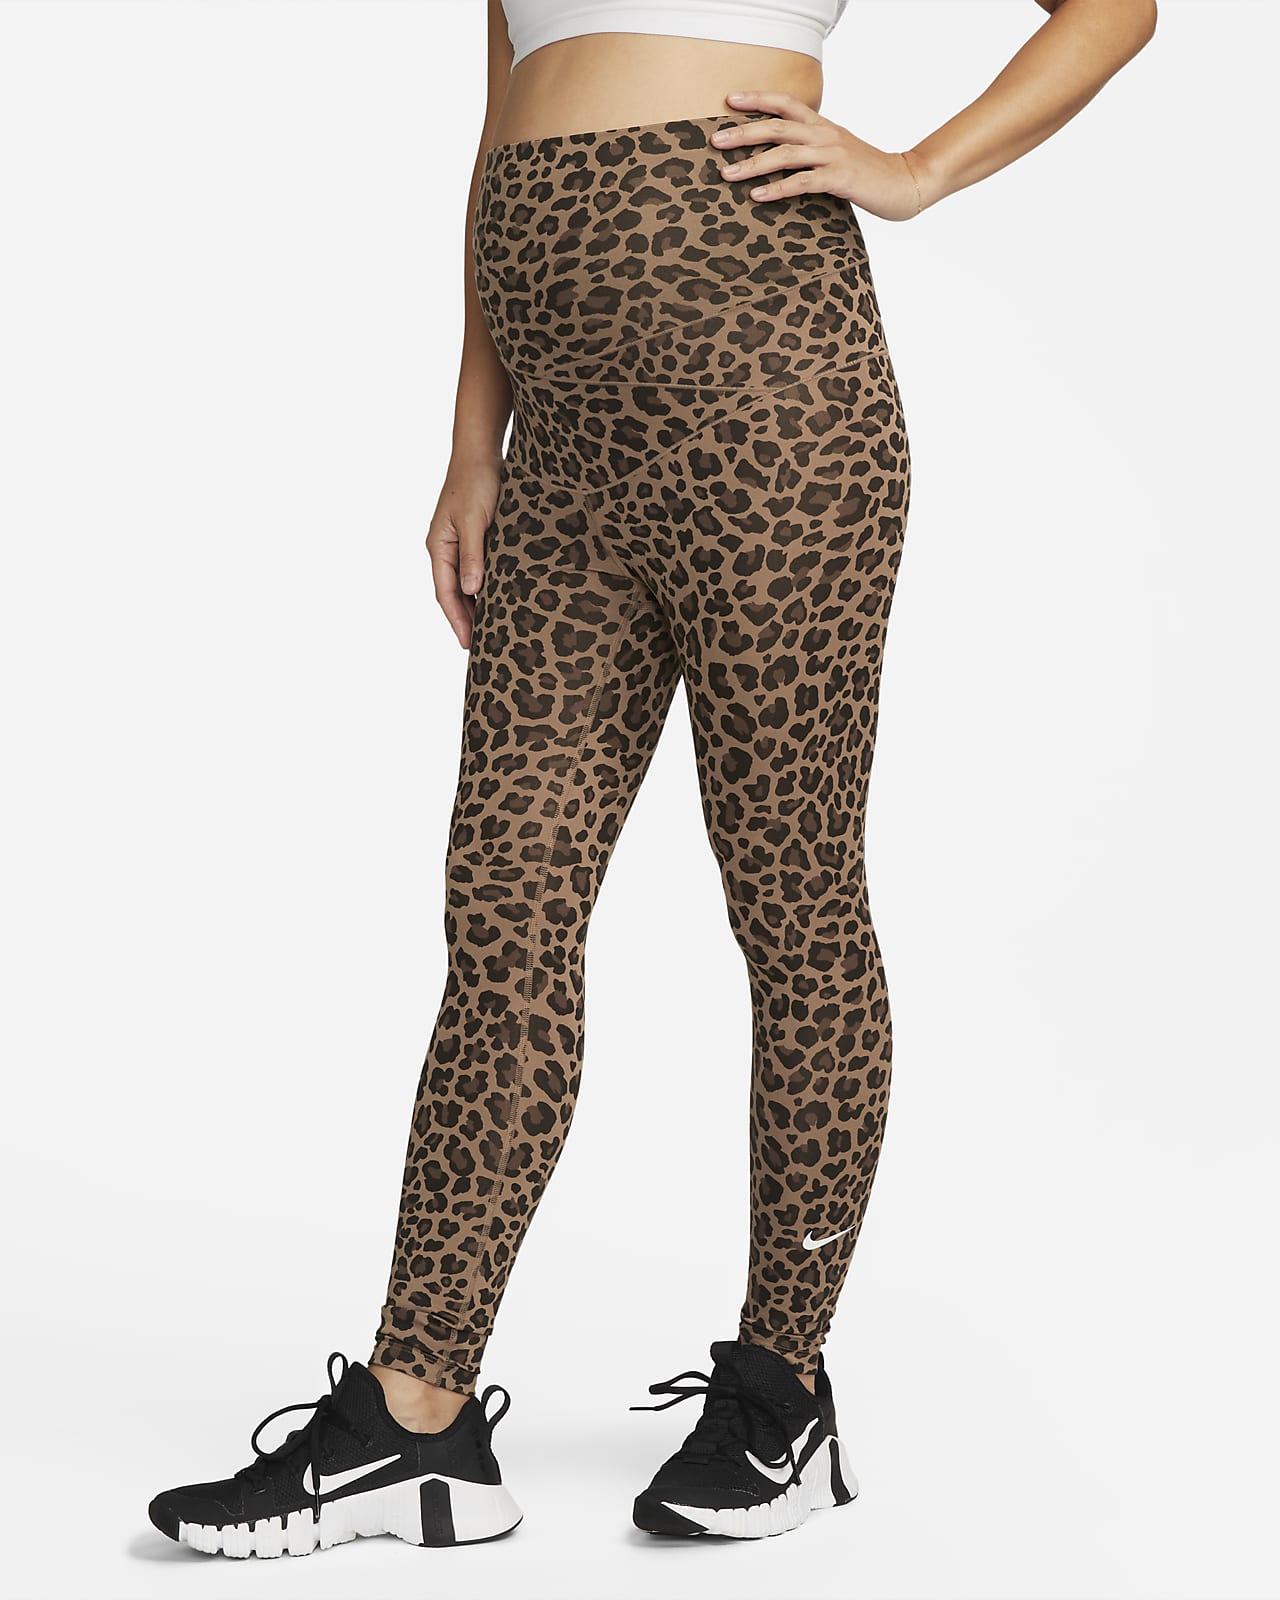 Nike One (M) Women's High-Waisted Leopard Print Leggings (Maternity)